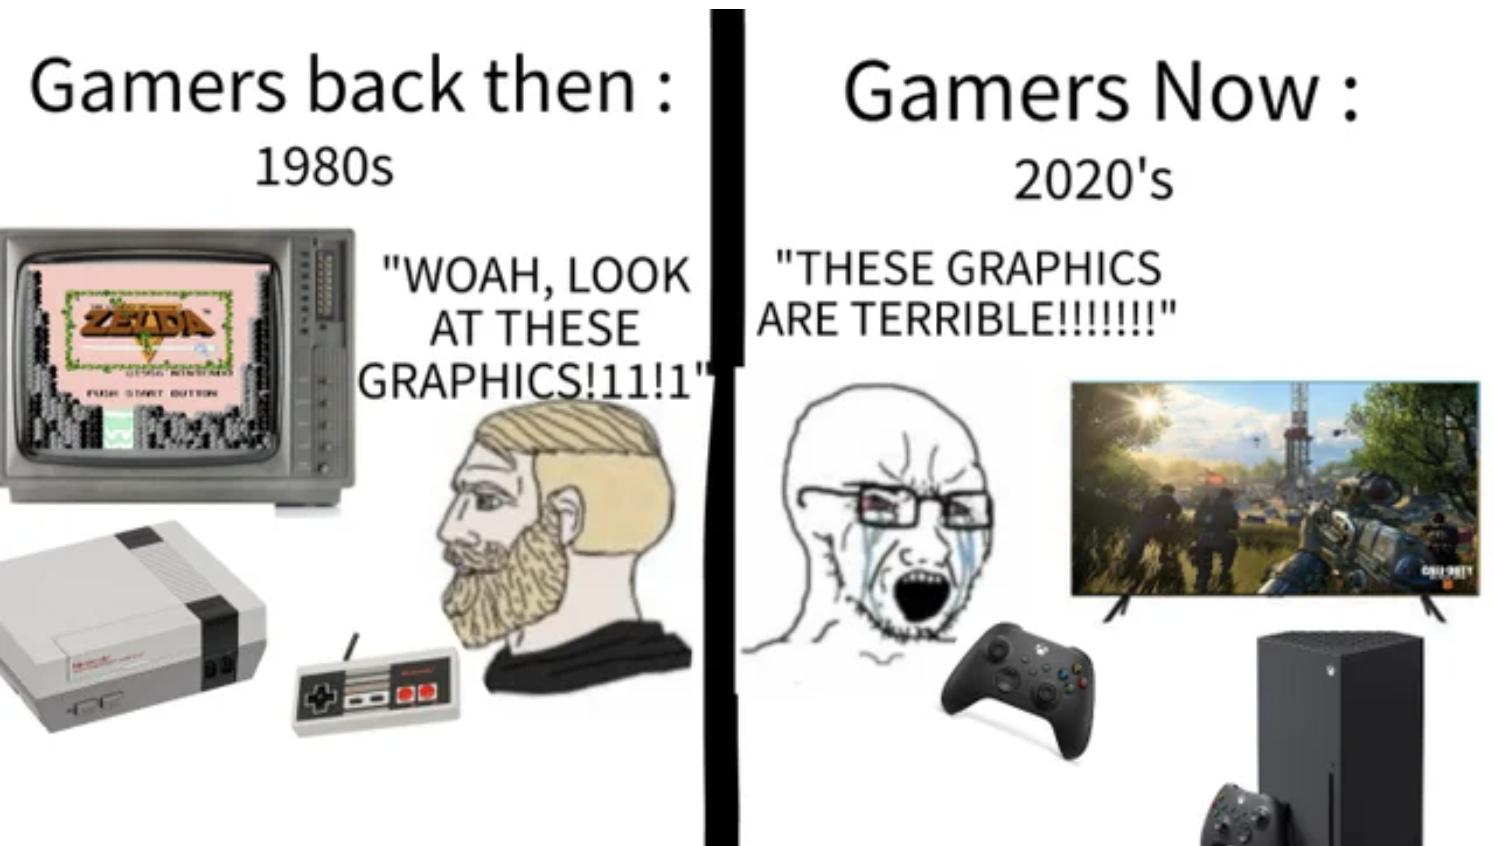 Gaming Memes - multimedia - Gamers back then 1980s Zer